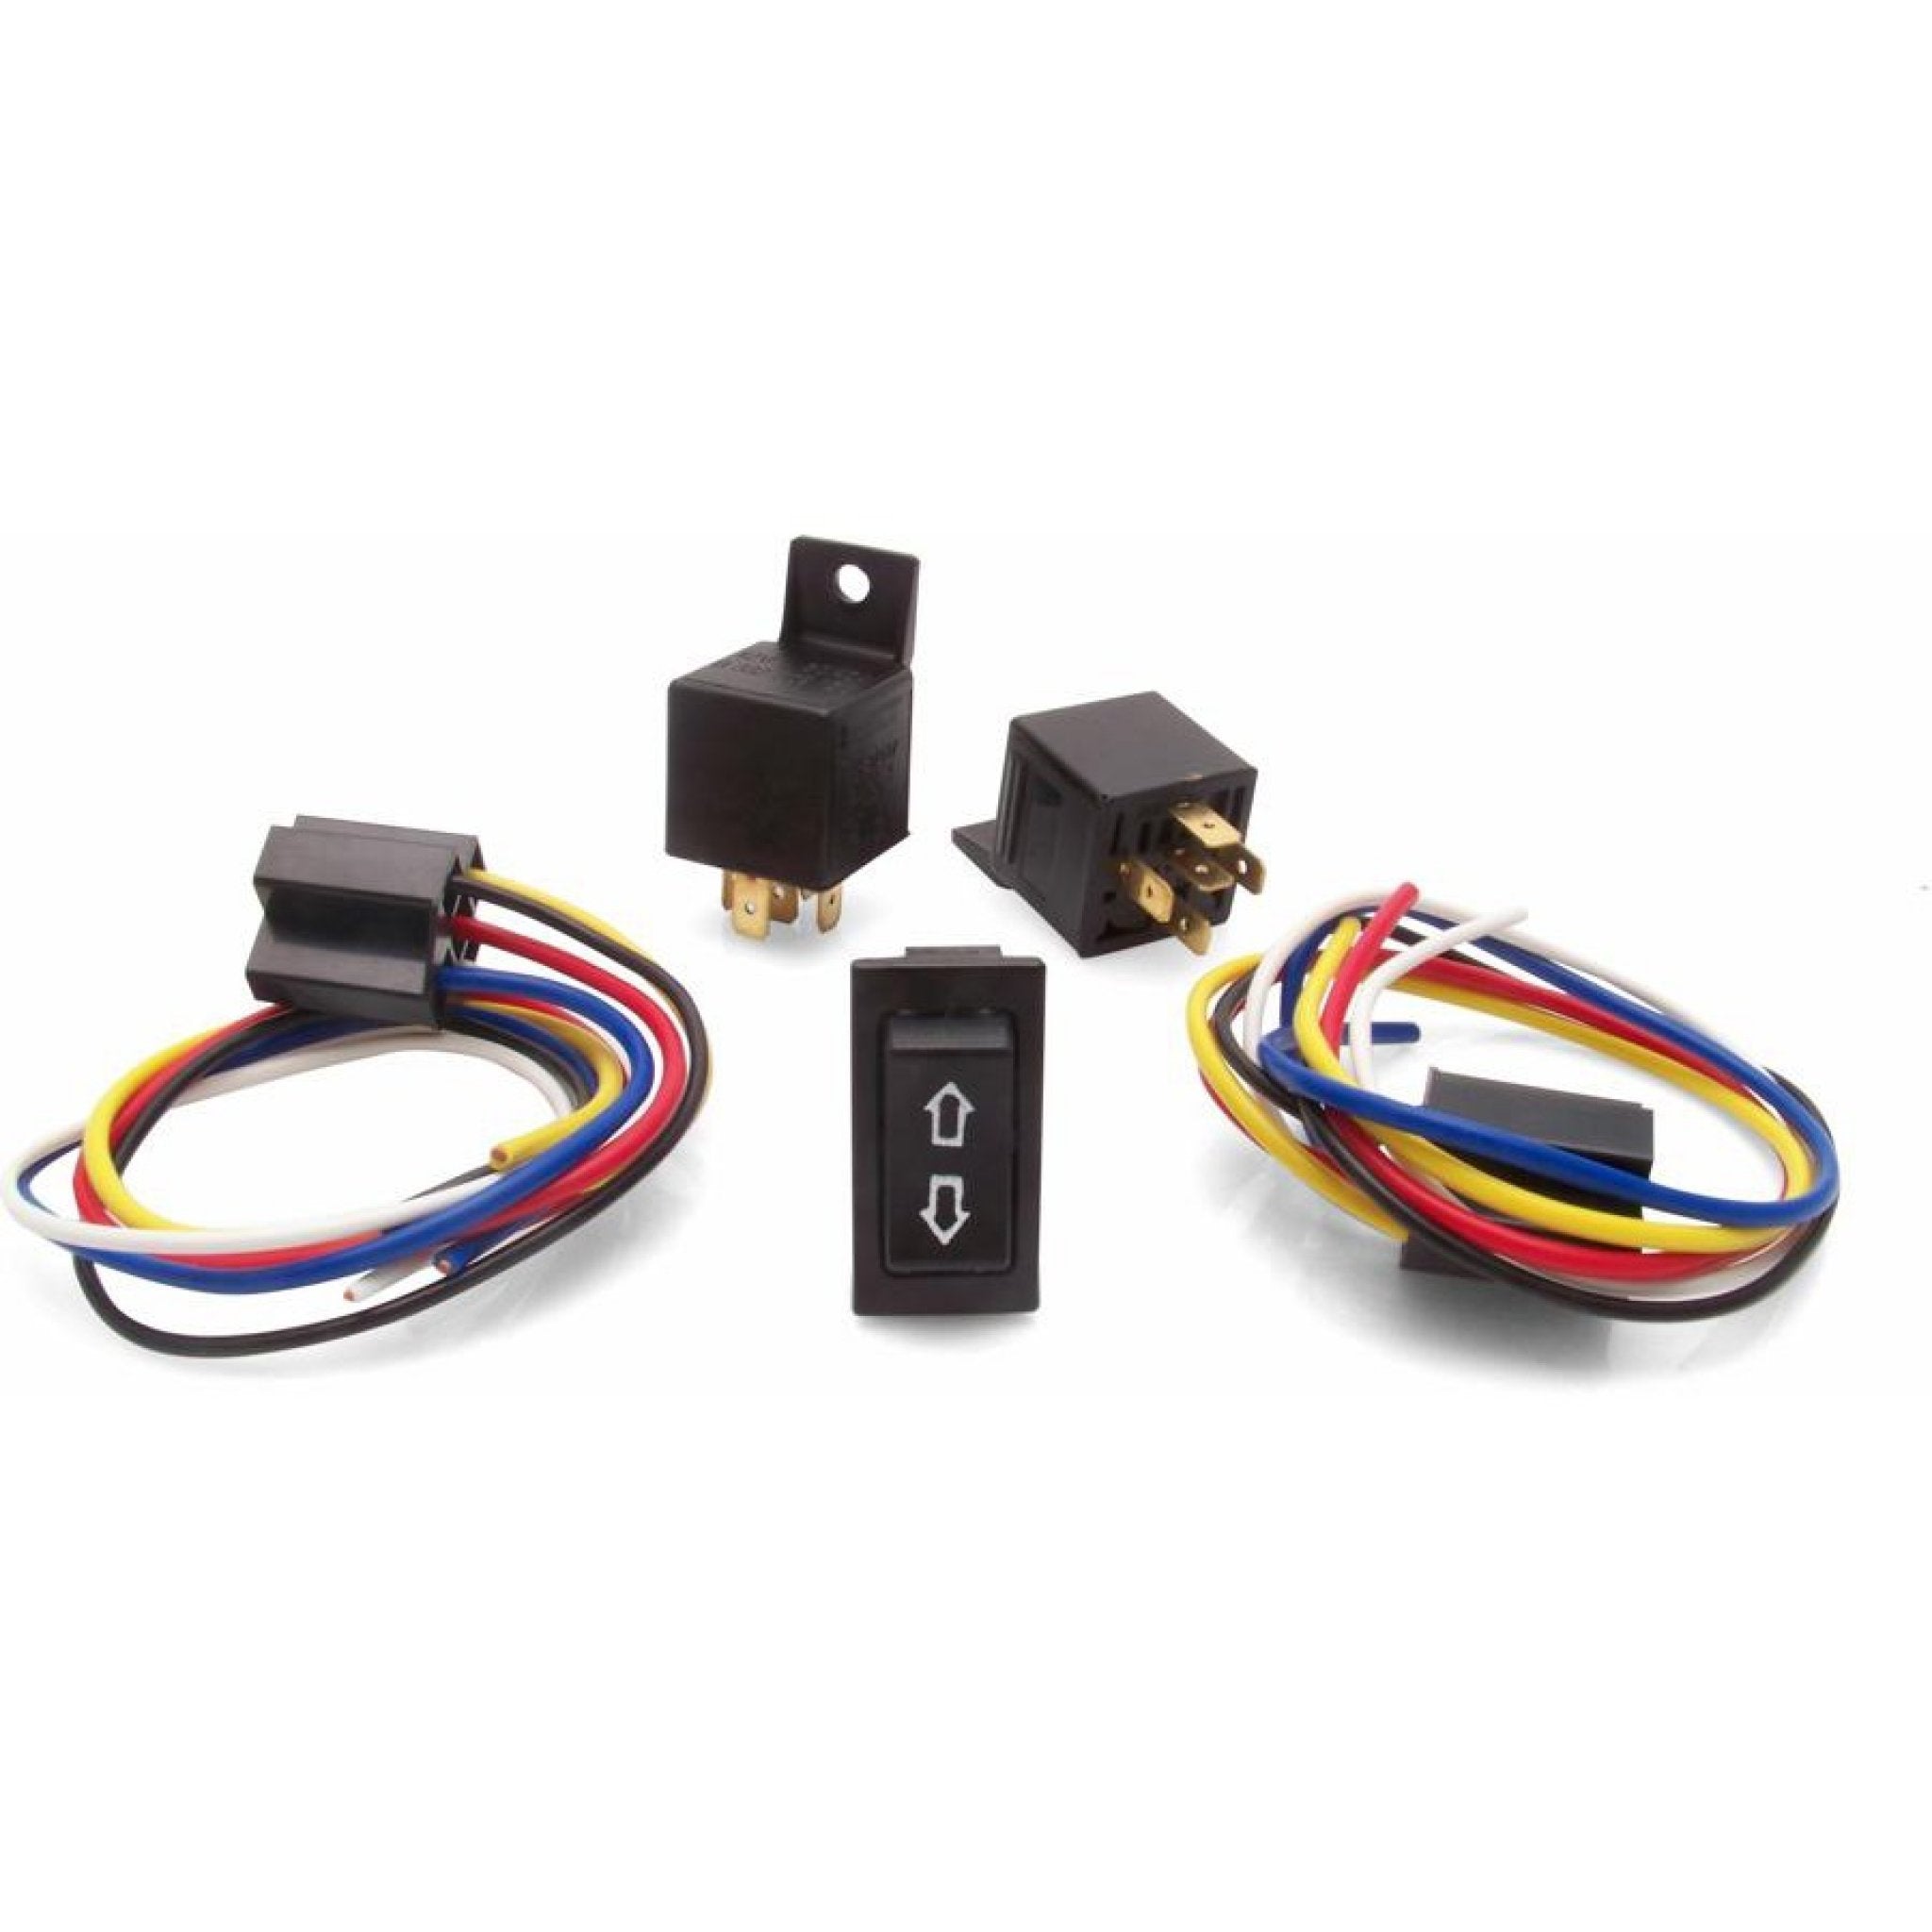 12V Linear Actuator Motor Rocker Switch Installation Kit w/ Wiring Harness Plug